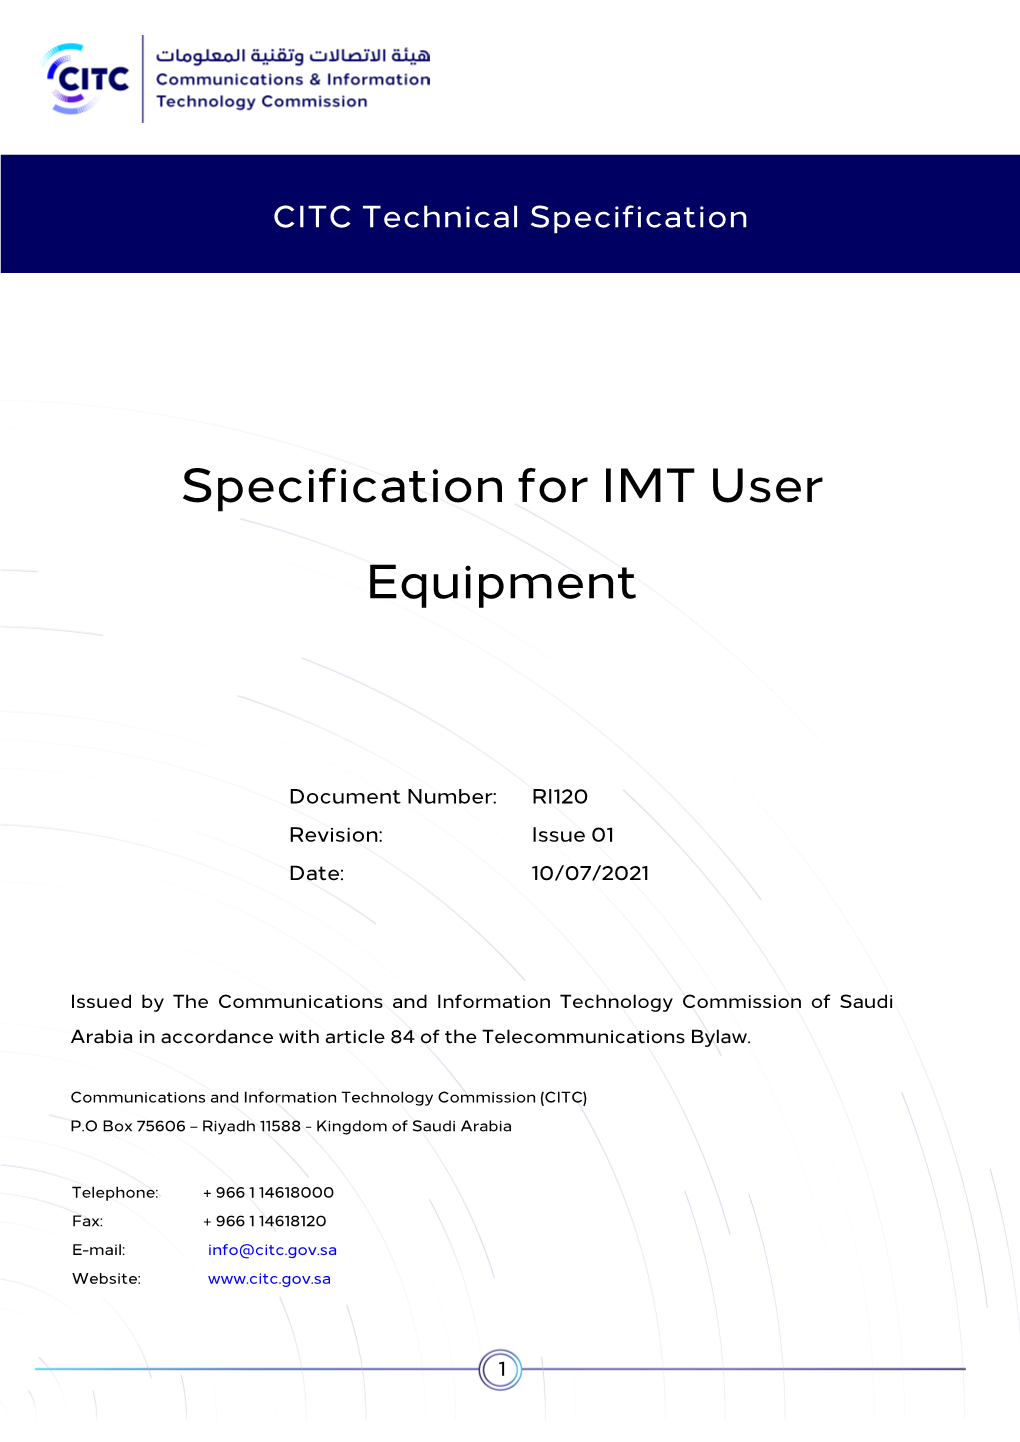 Specification for IMT User Equipment RI120